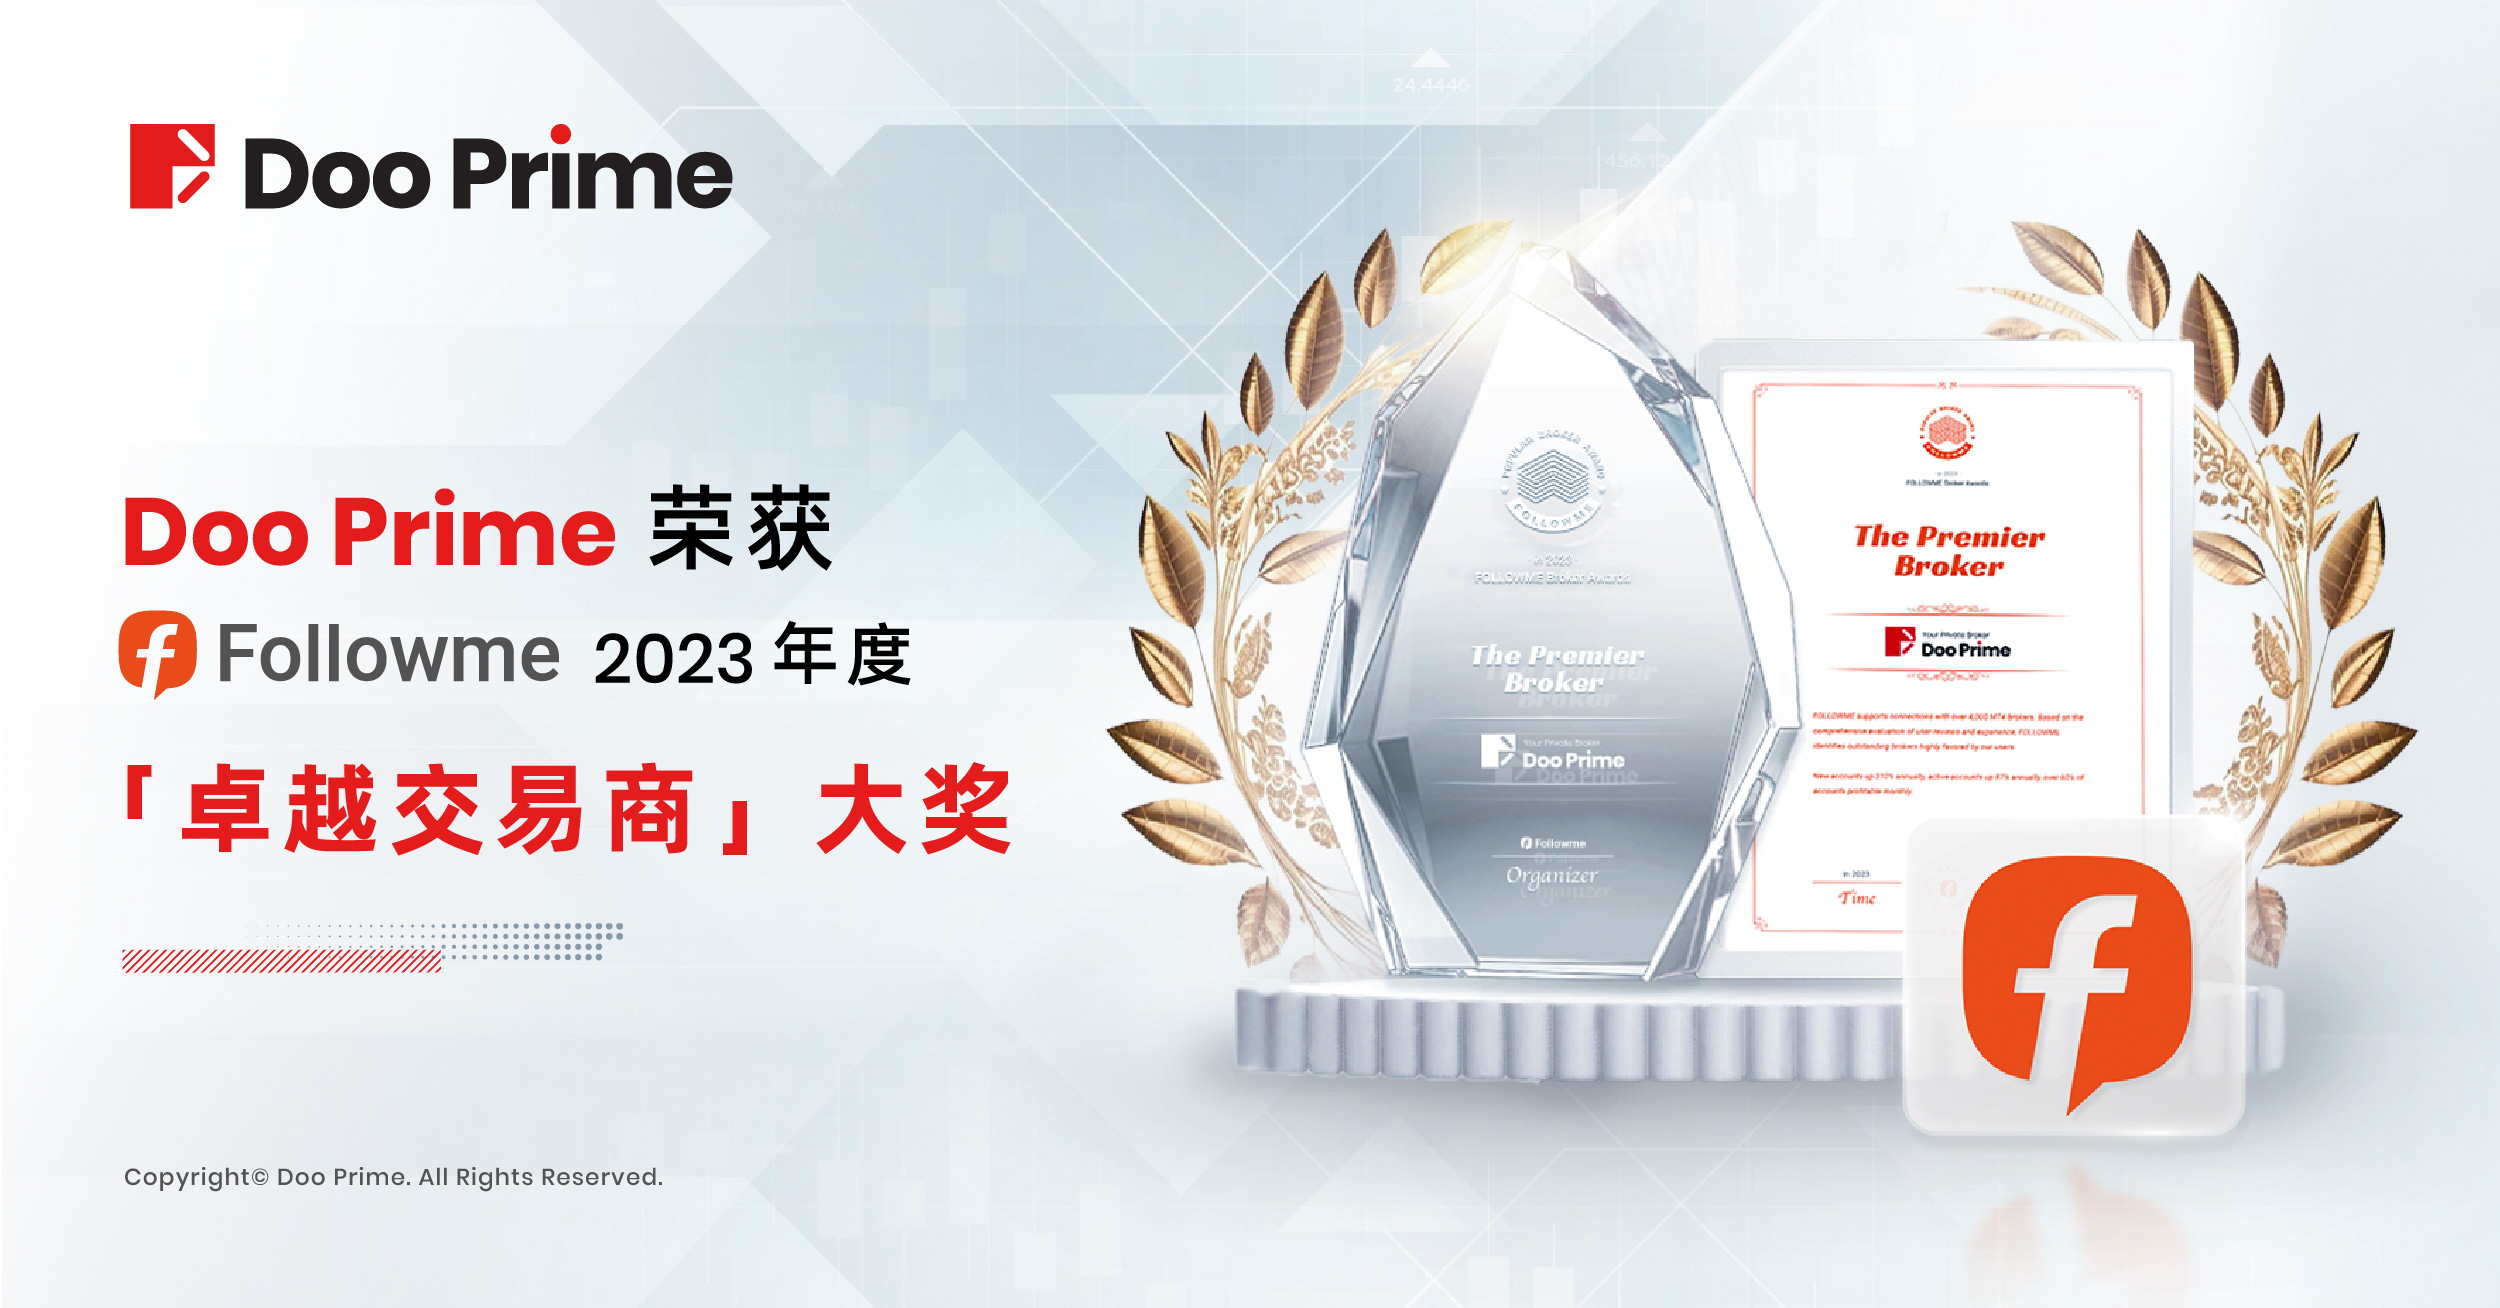 Doo Prime 荣获 2023 年 FOLLOWME“卓越交易商”大奖 